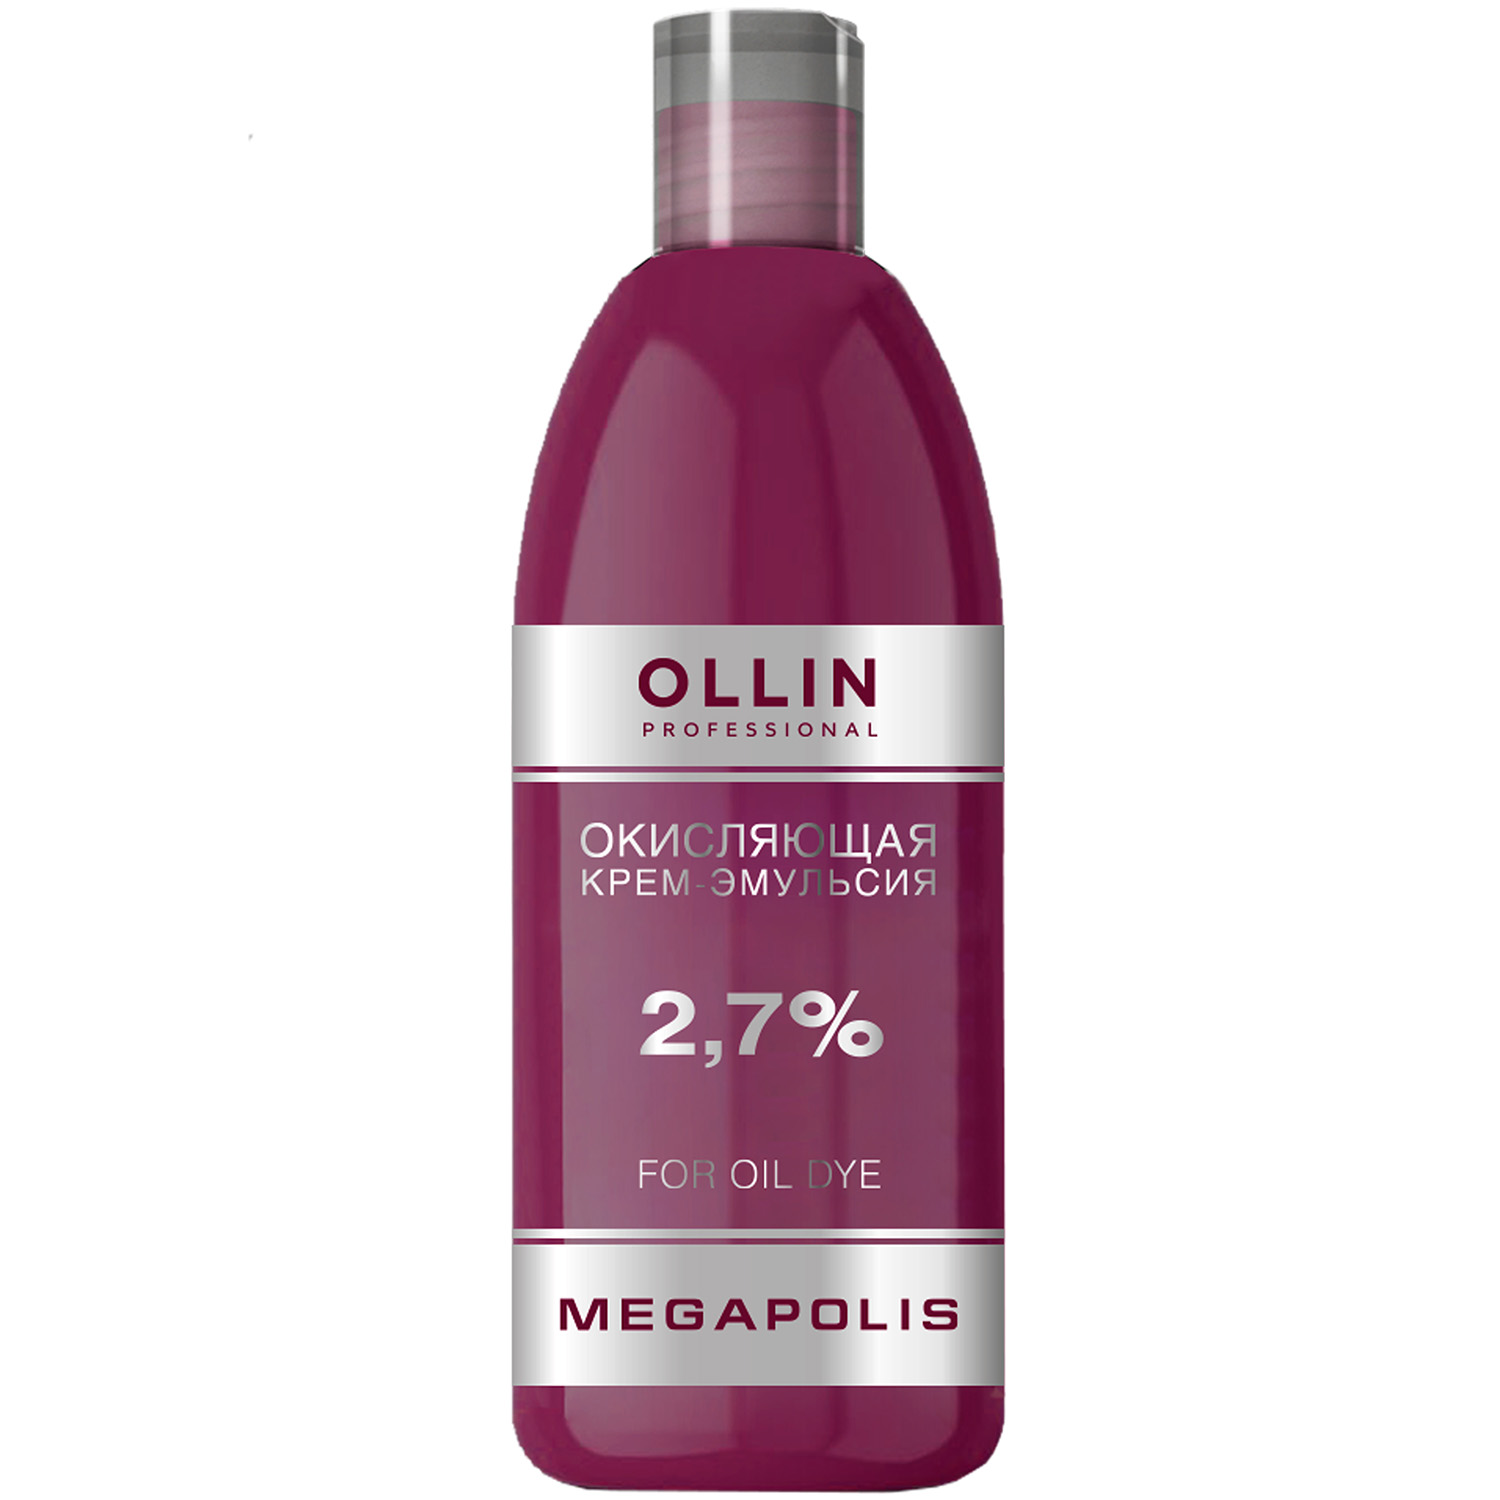 Ollin Professional Окисляющая крем-эмульсия 2,7%, 500 мл (Ollin Professional, Megapolis) окисляющая крем эмульсия megapolis 2 7% 500 мл